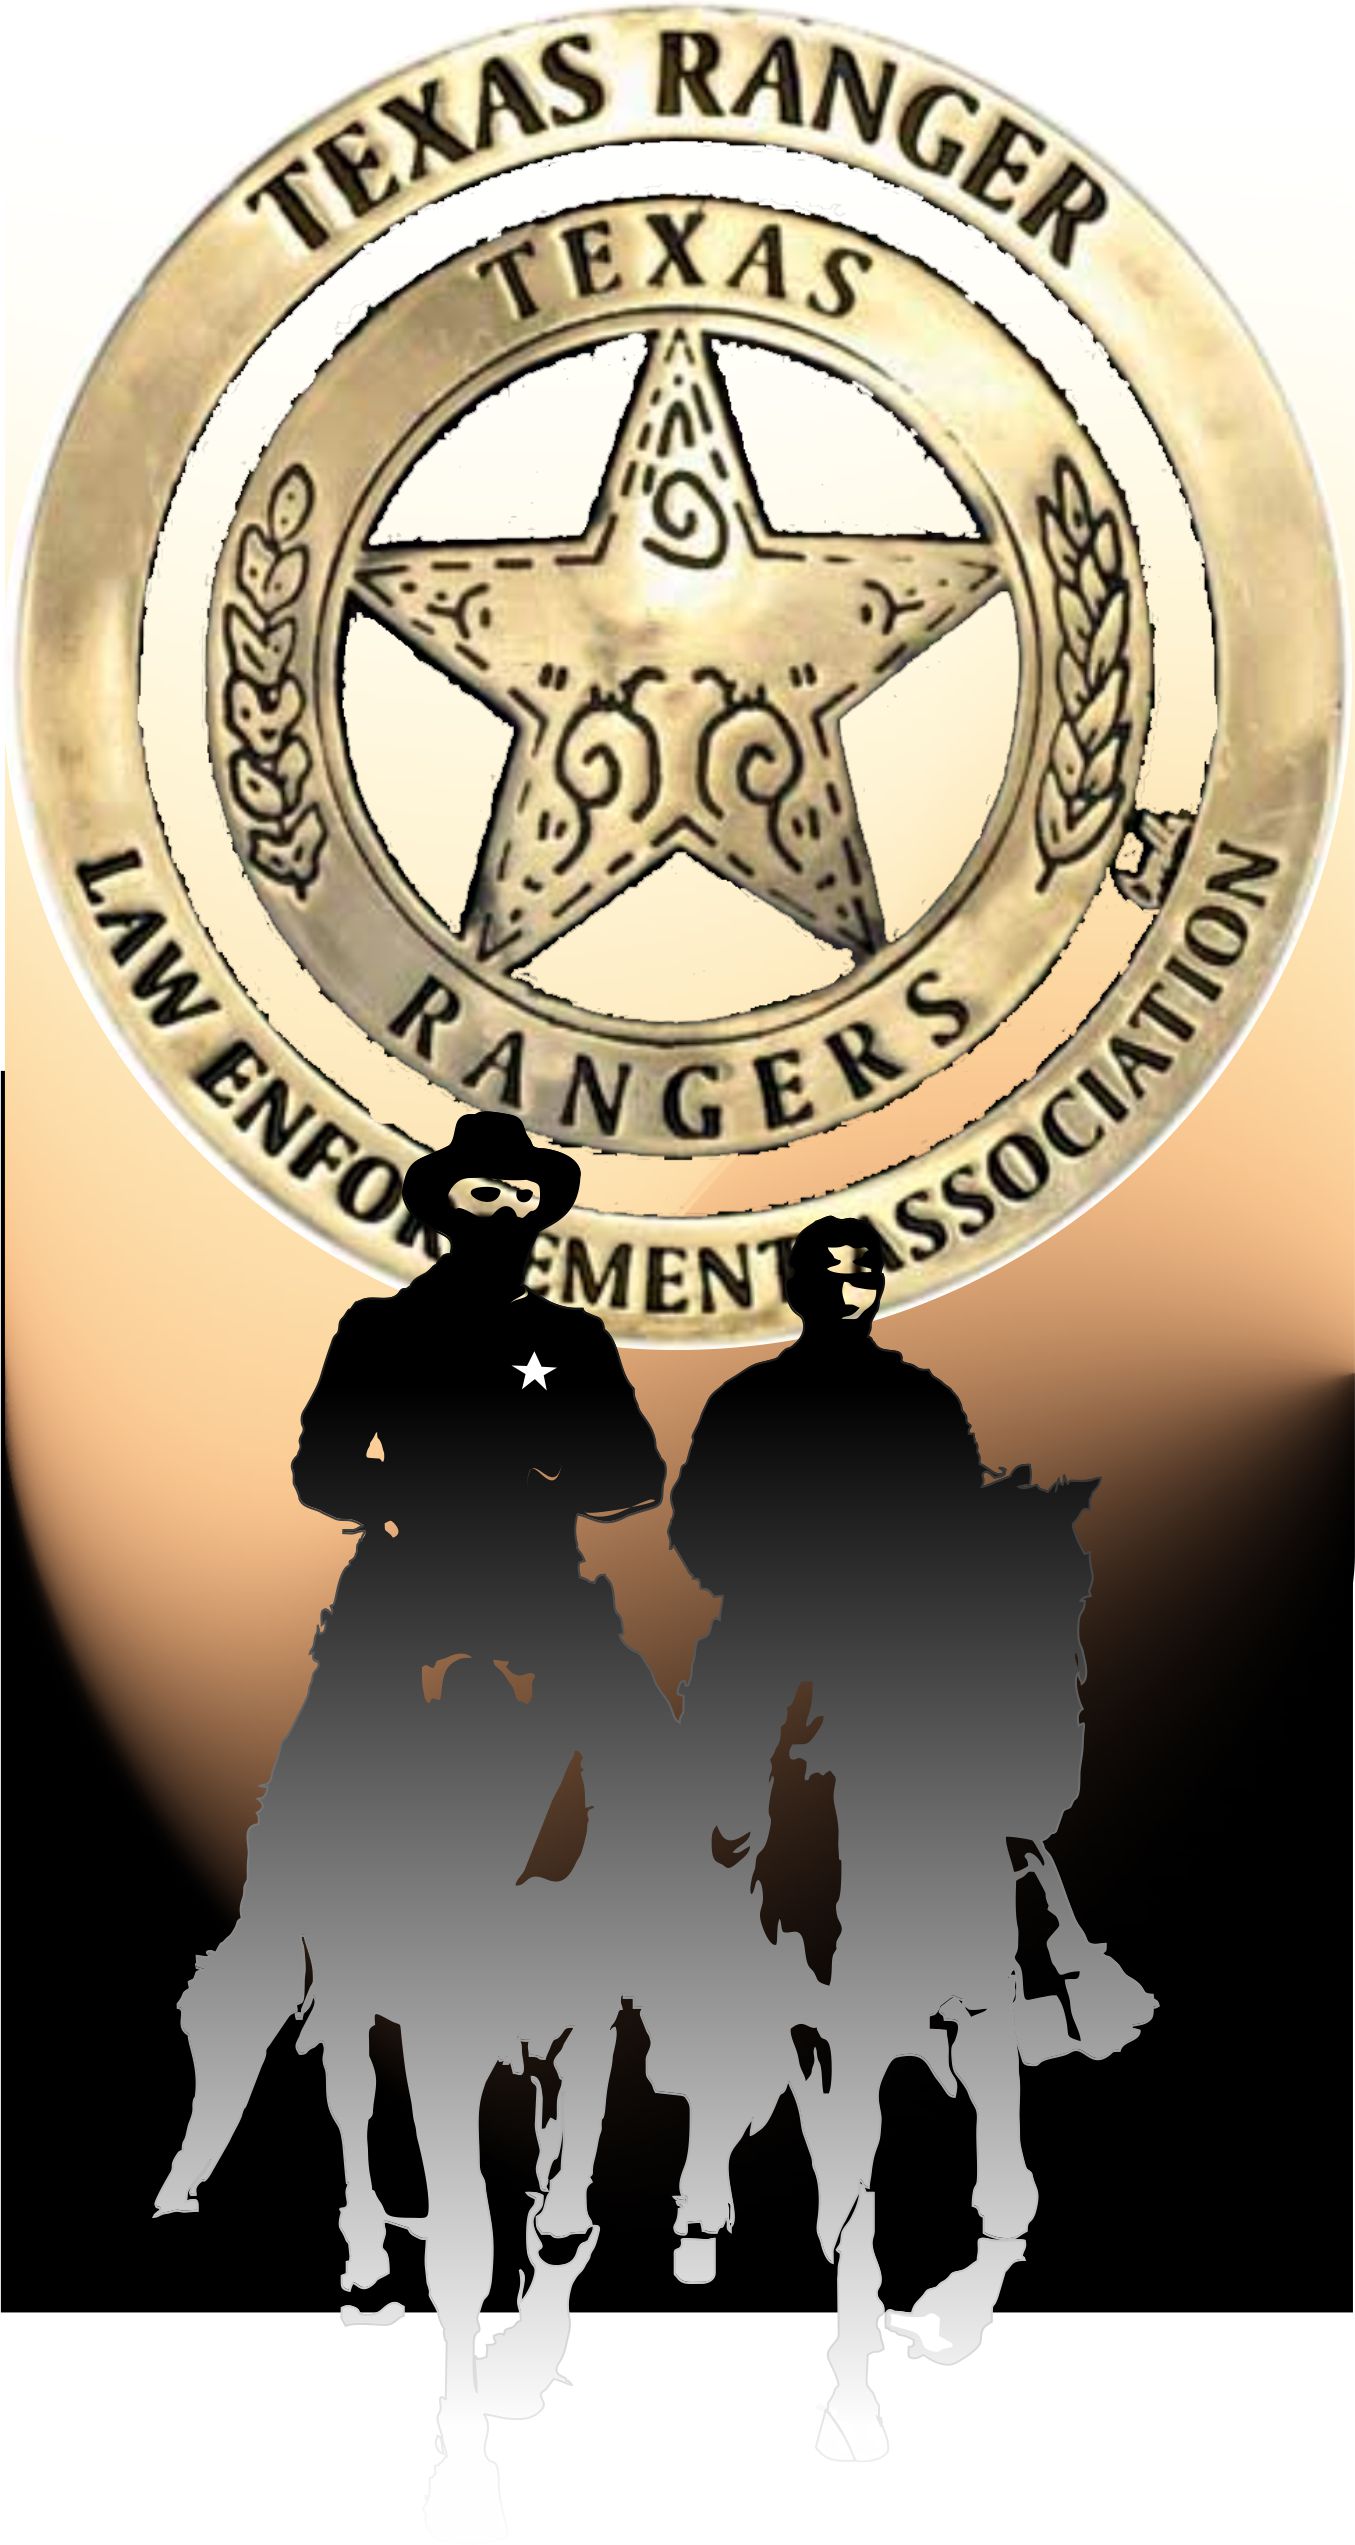 Texas Rangers badge 8